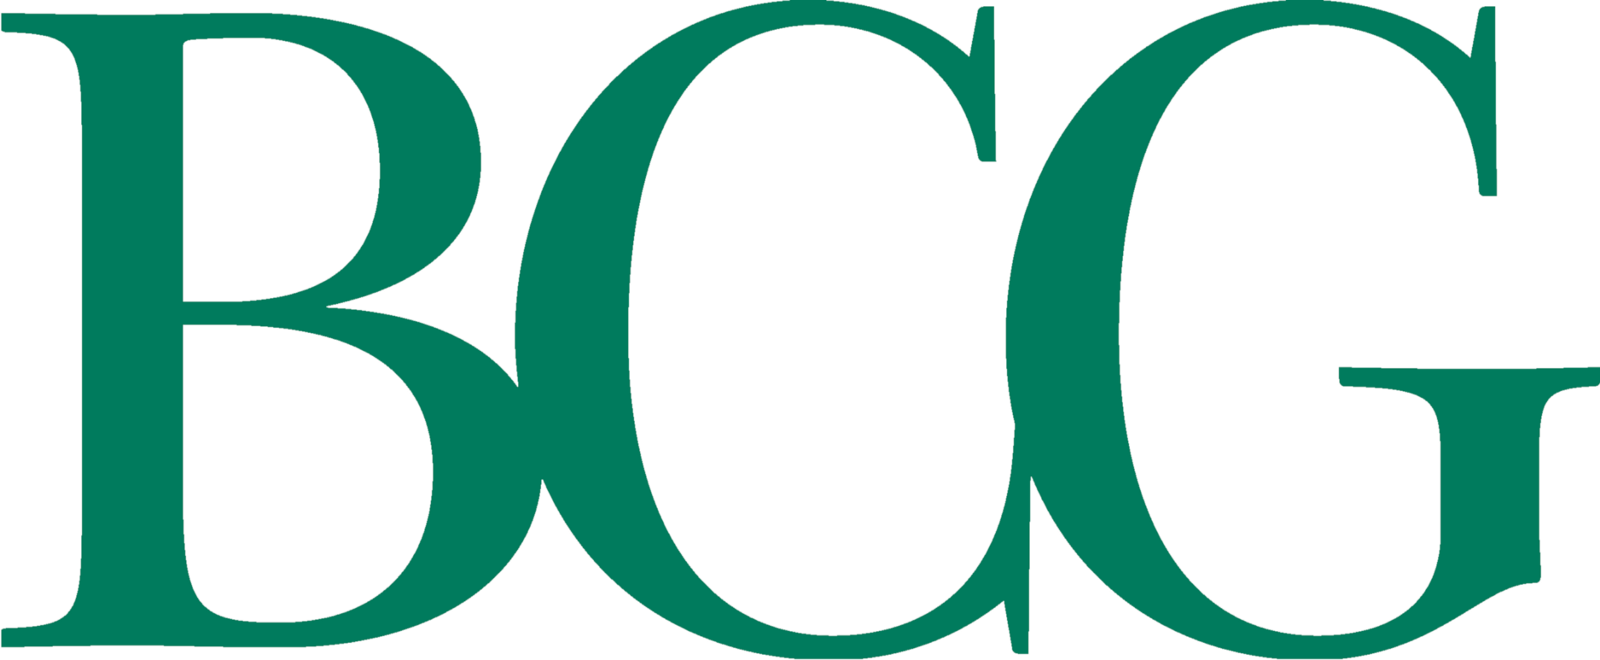 BCG Logo - Boston Consulting Group” goes rebranding – Davide Scialpi ...